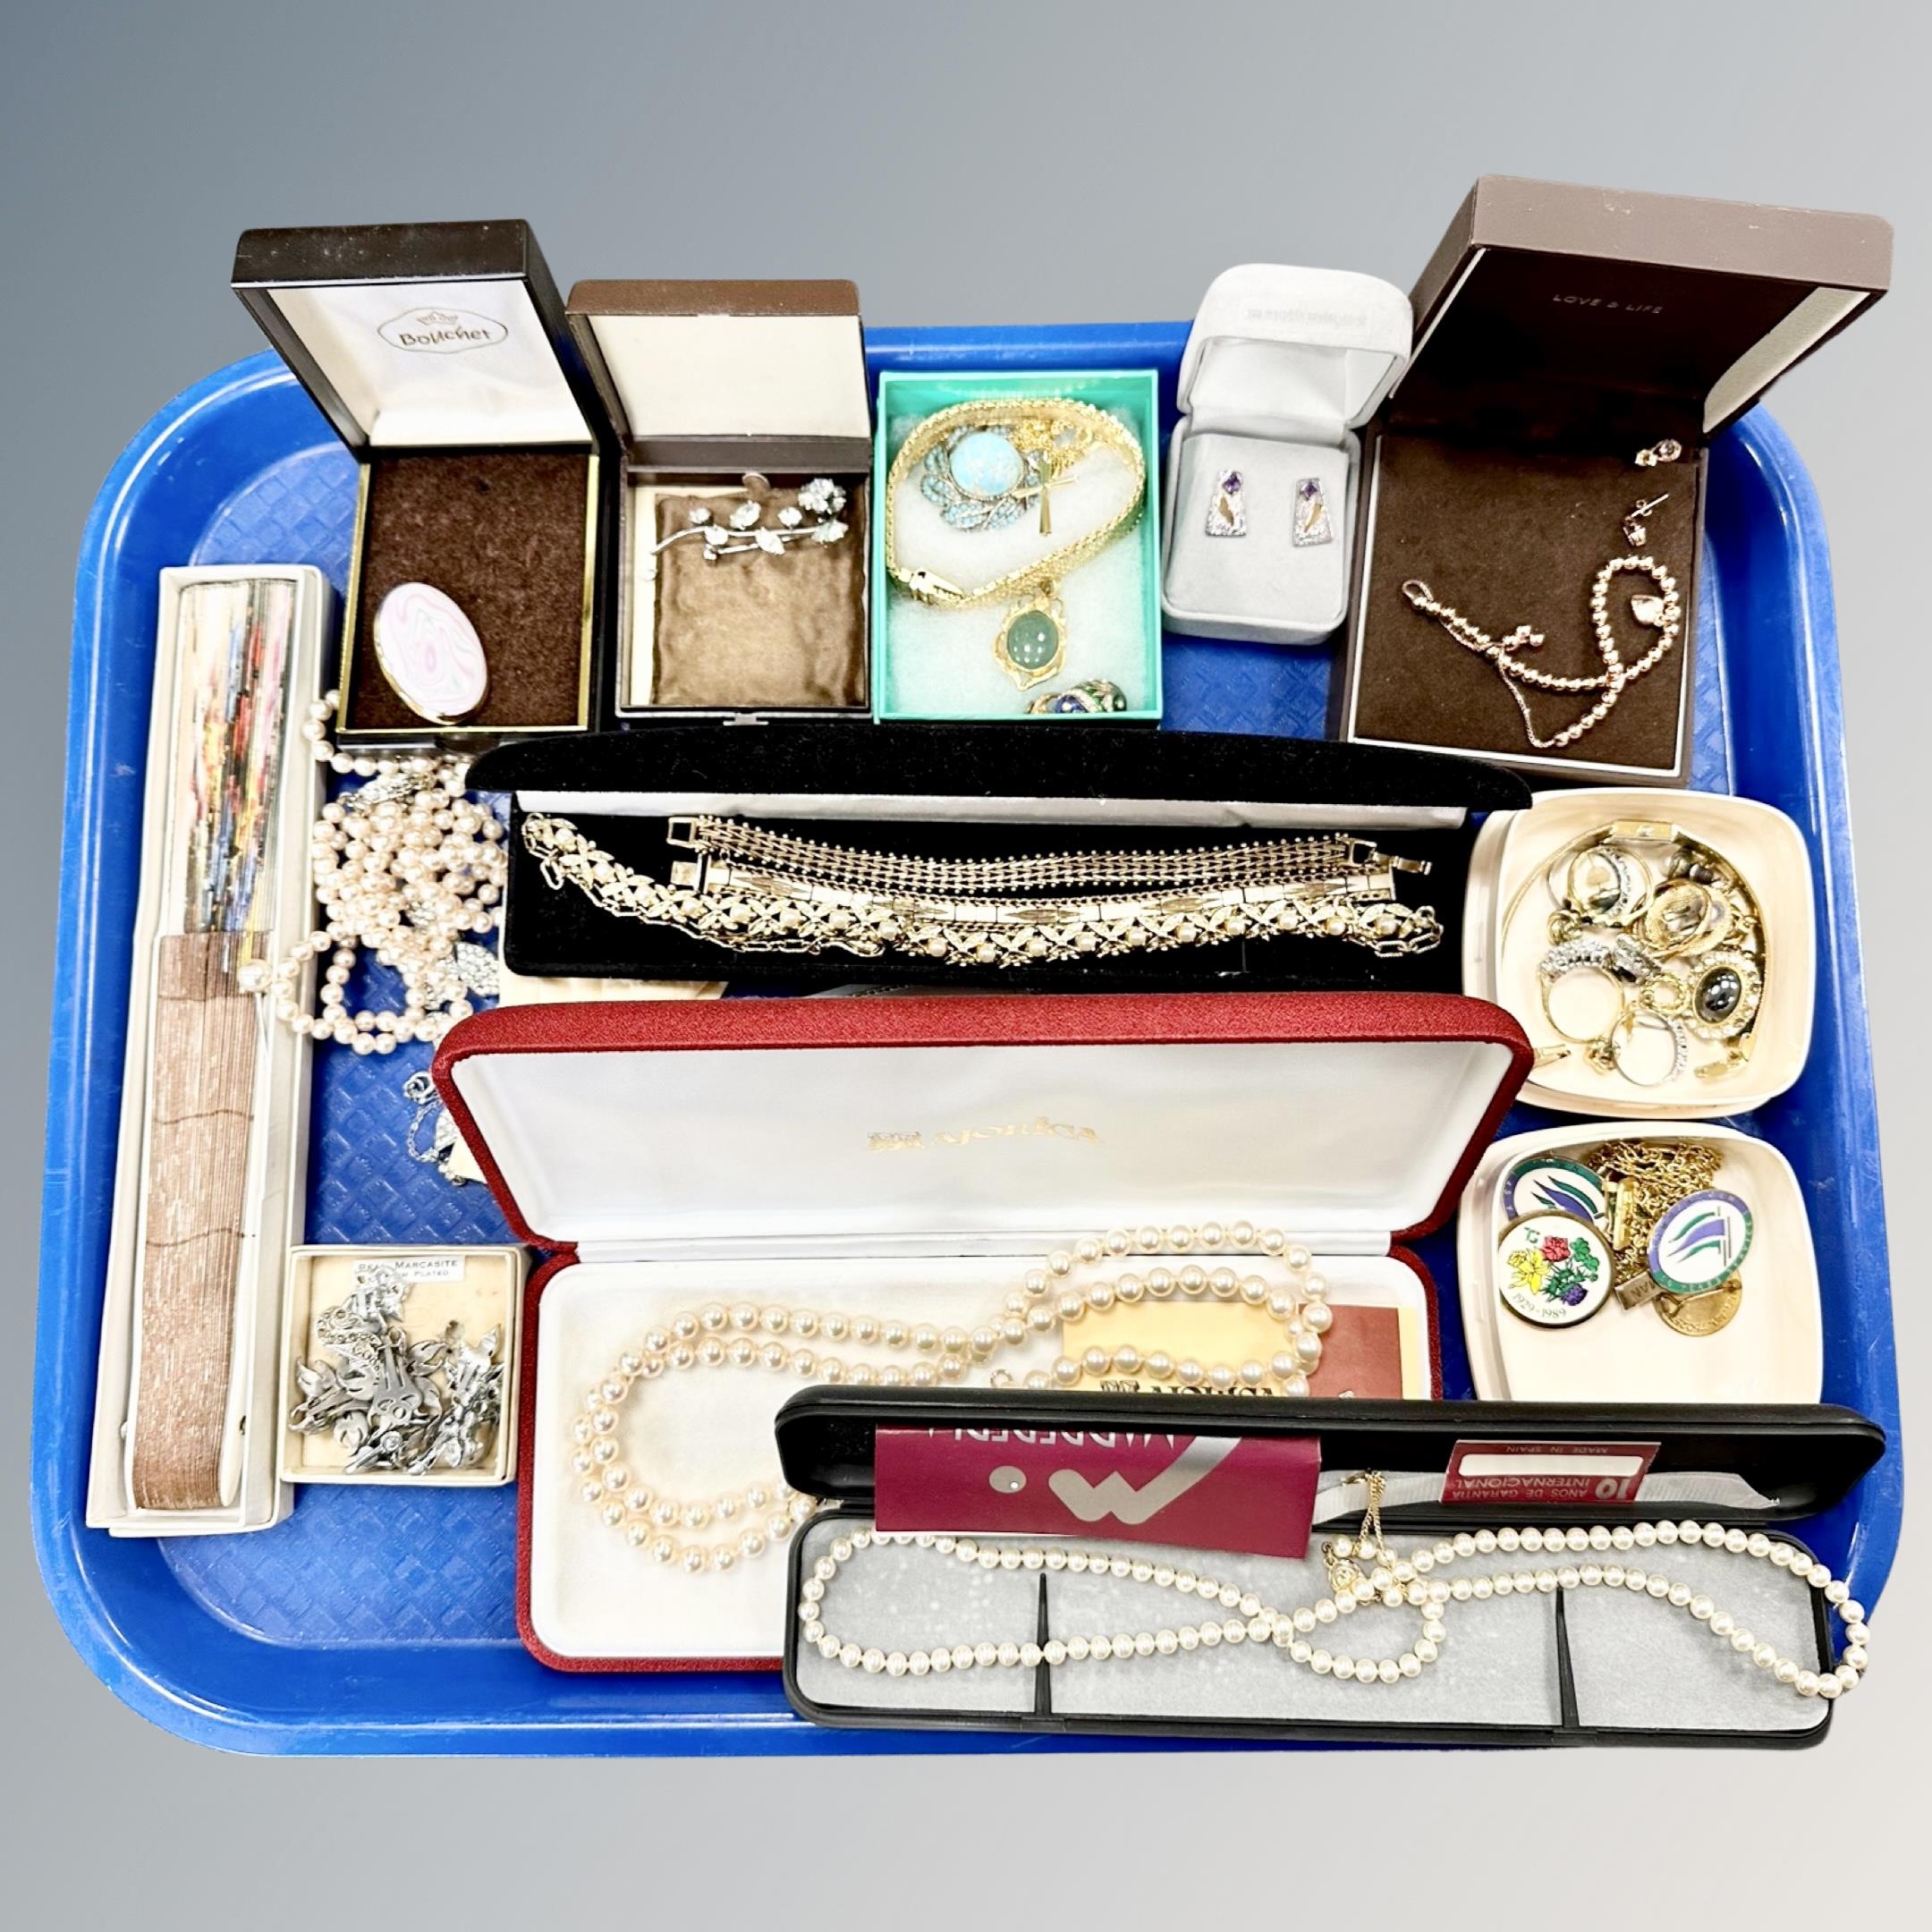 A tray of costume jewellery, hand fan,